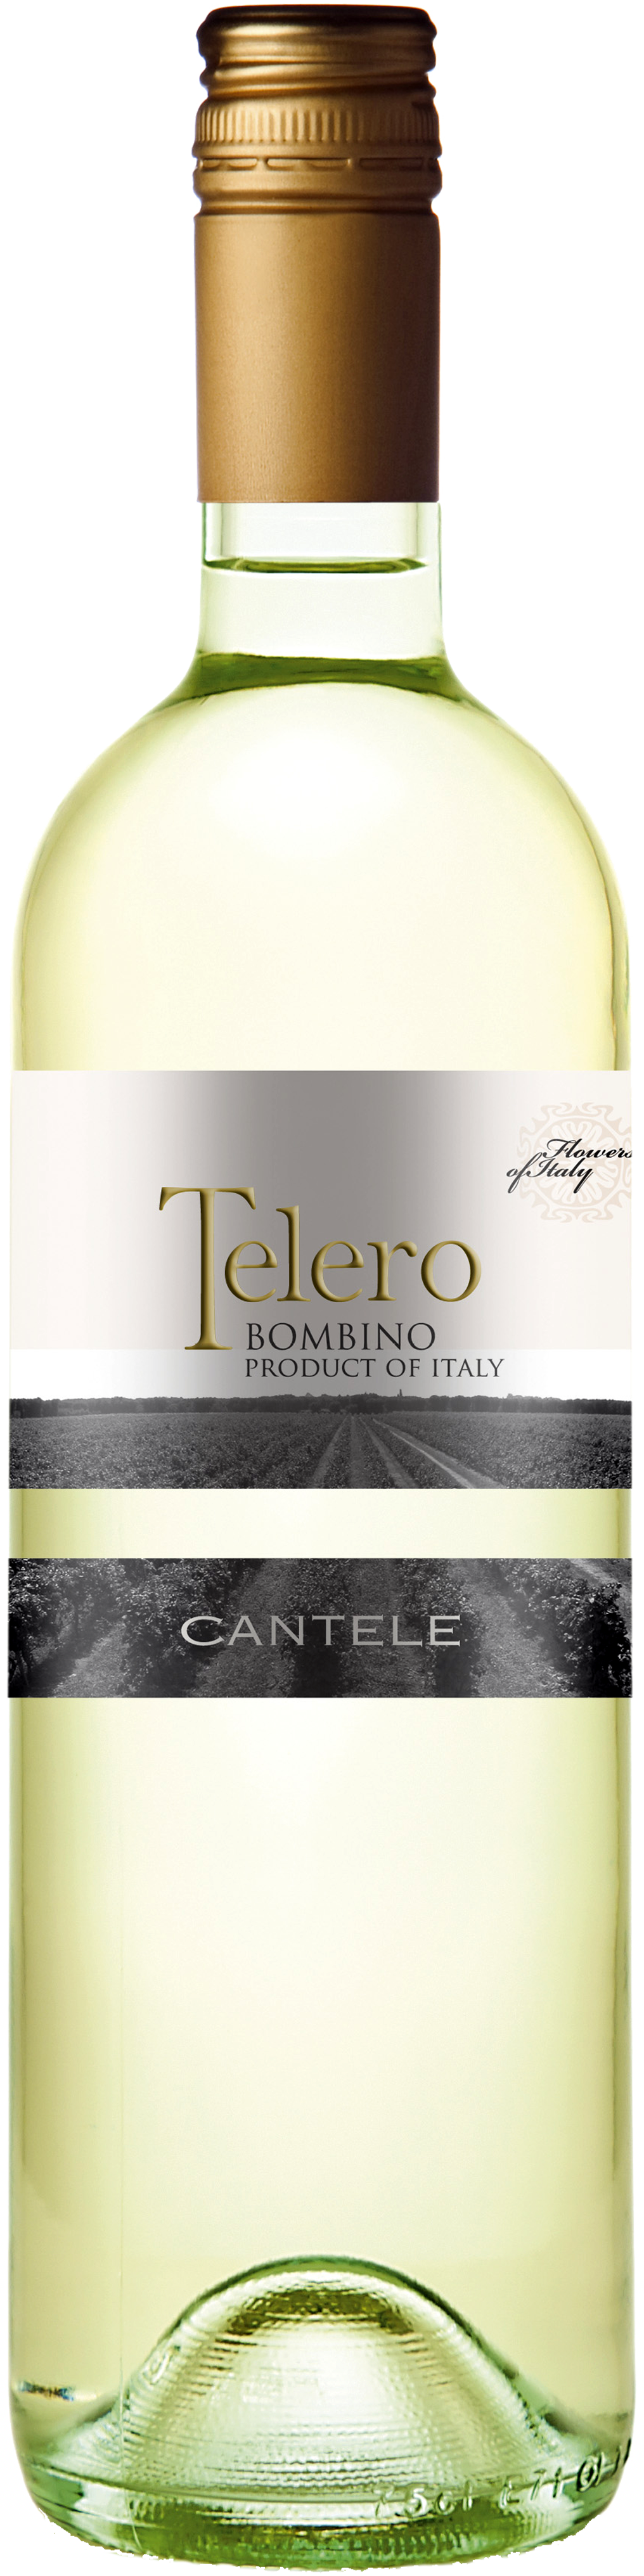 Bottle shot of 2015 Telero Bianco (Bombino)